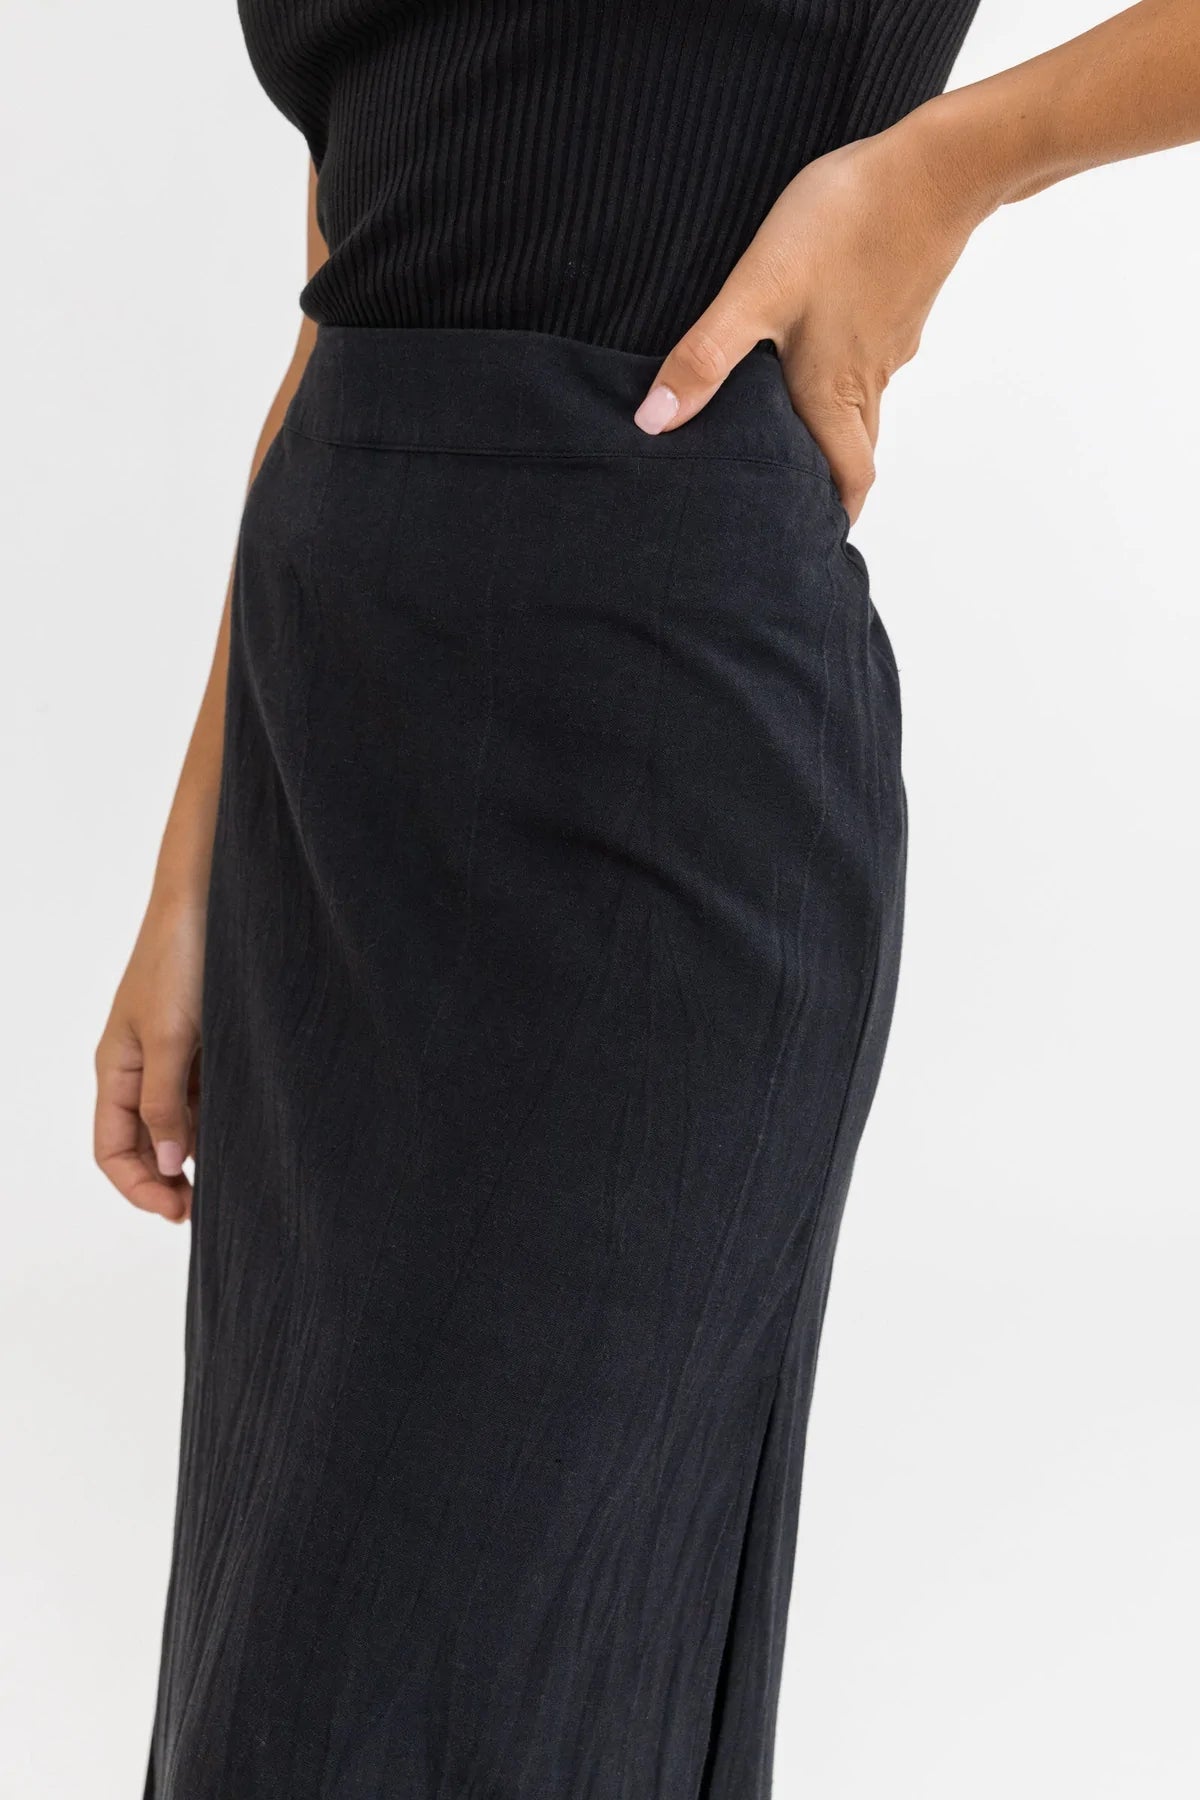 Classic Midi Skirt- Black